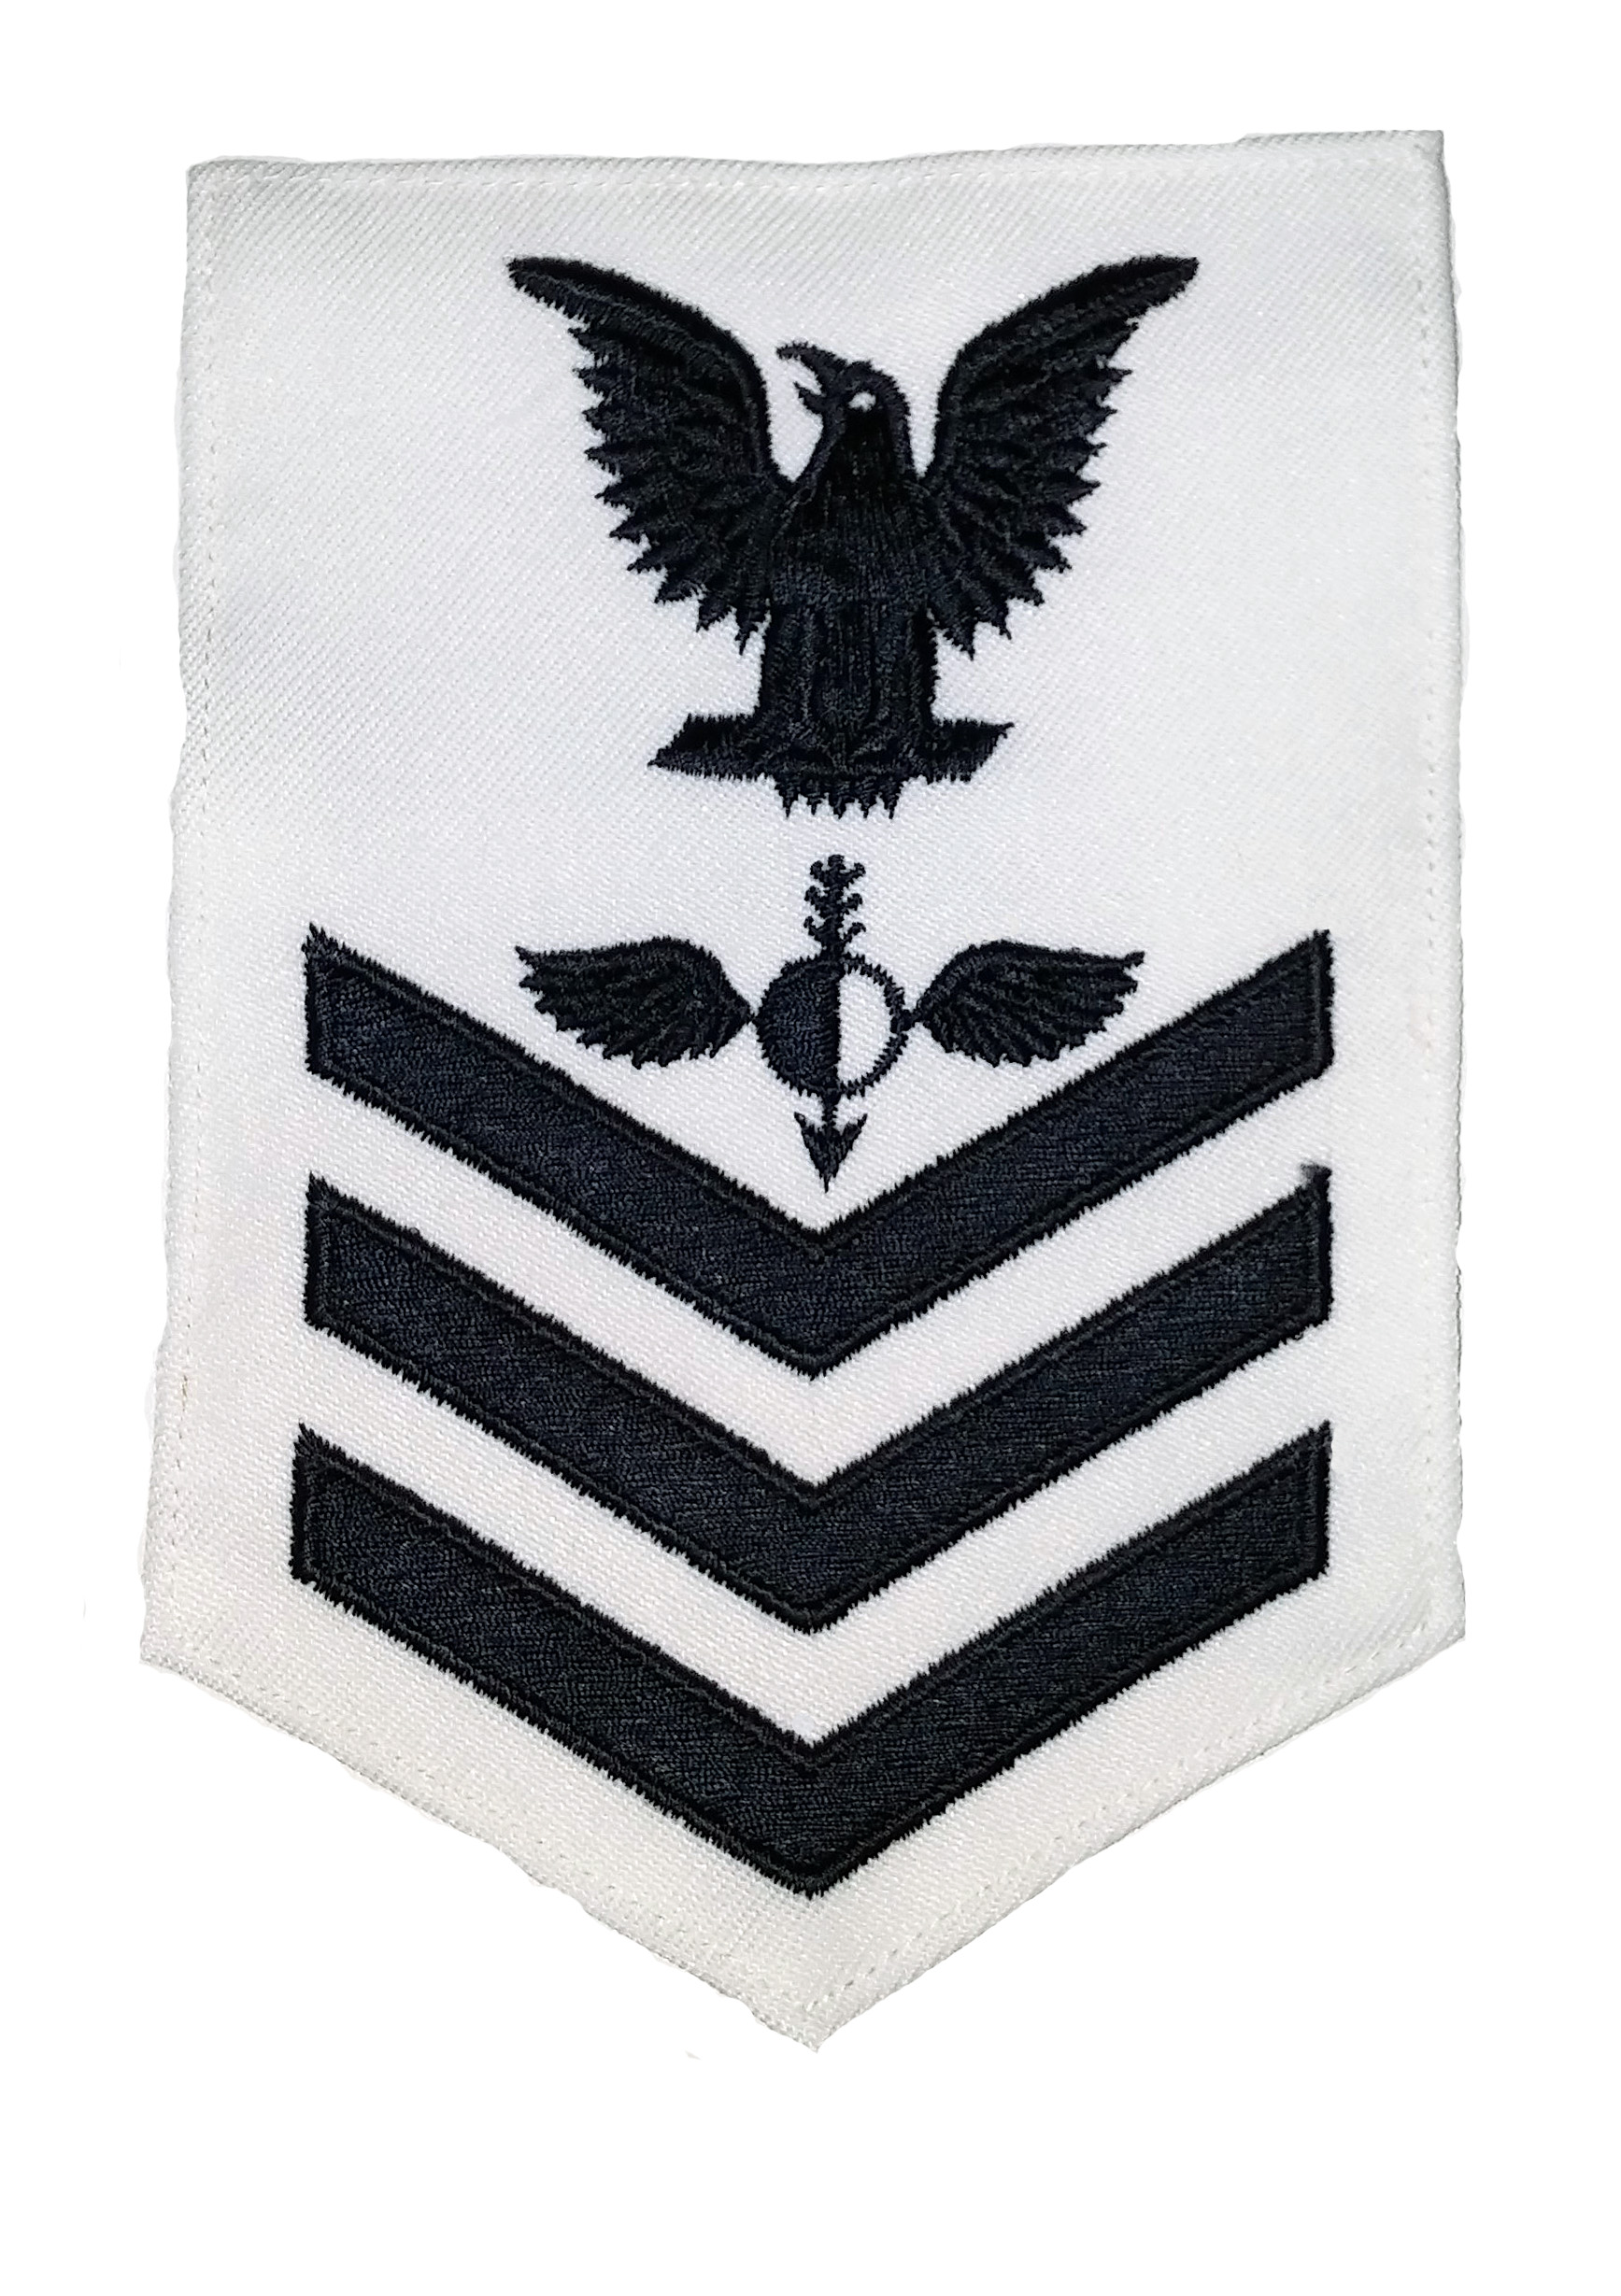 White U.S eagle patch